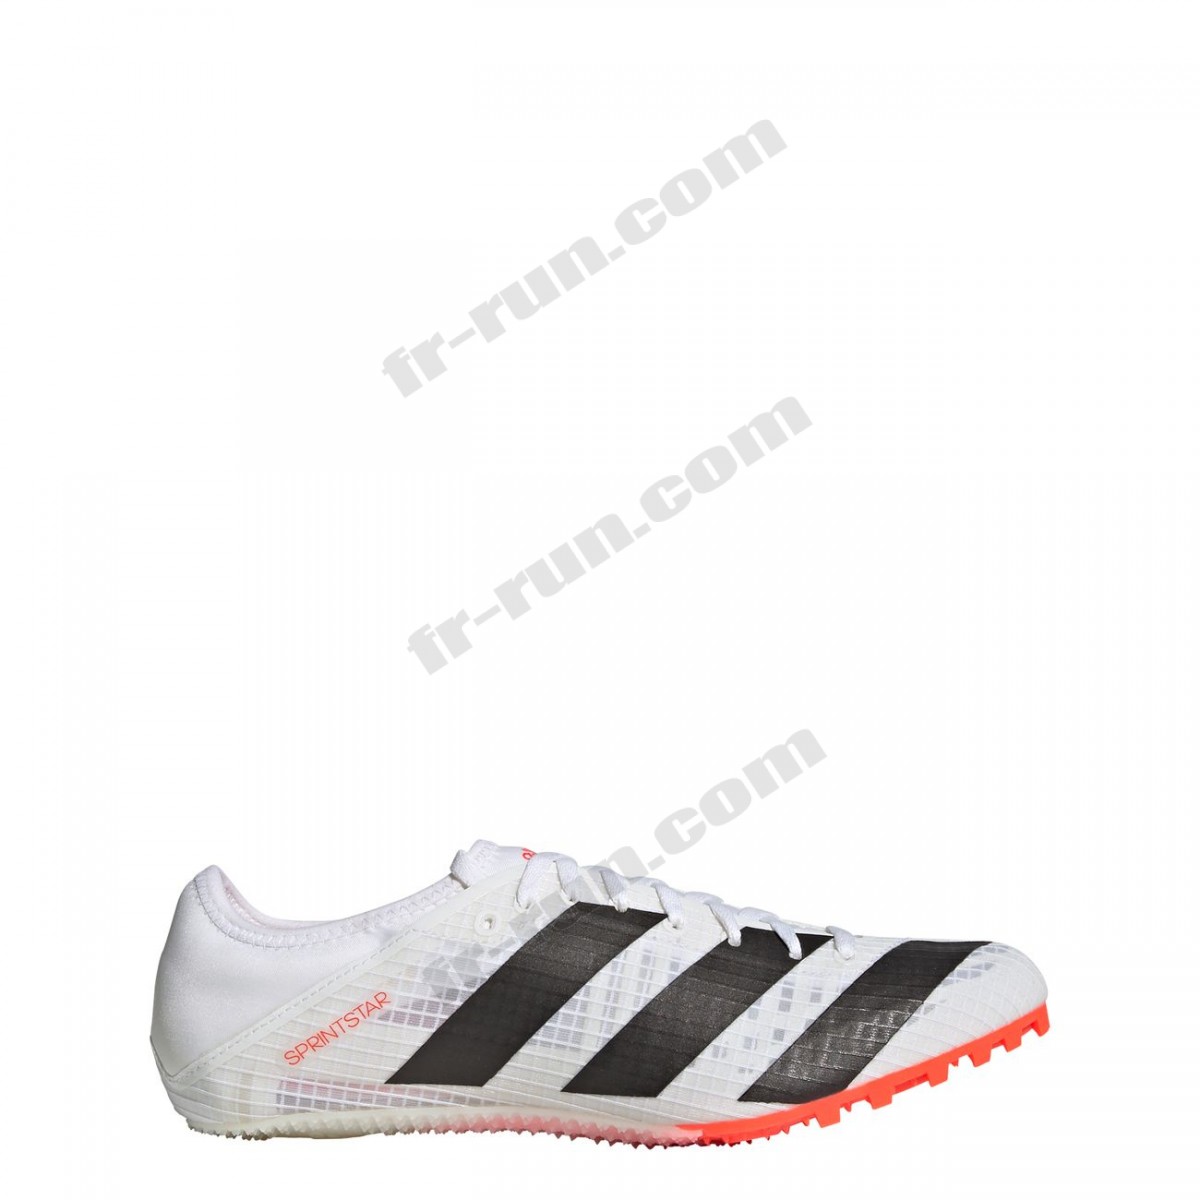 Adidas/Athlétisme homme ADIDAS Chaussures adidas Sprintstar Tokyo √ Nouveau style √ Soldes - -1